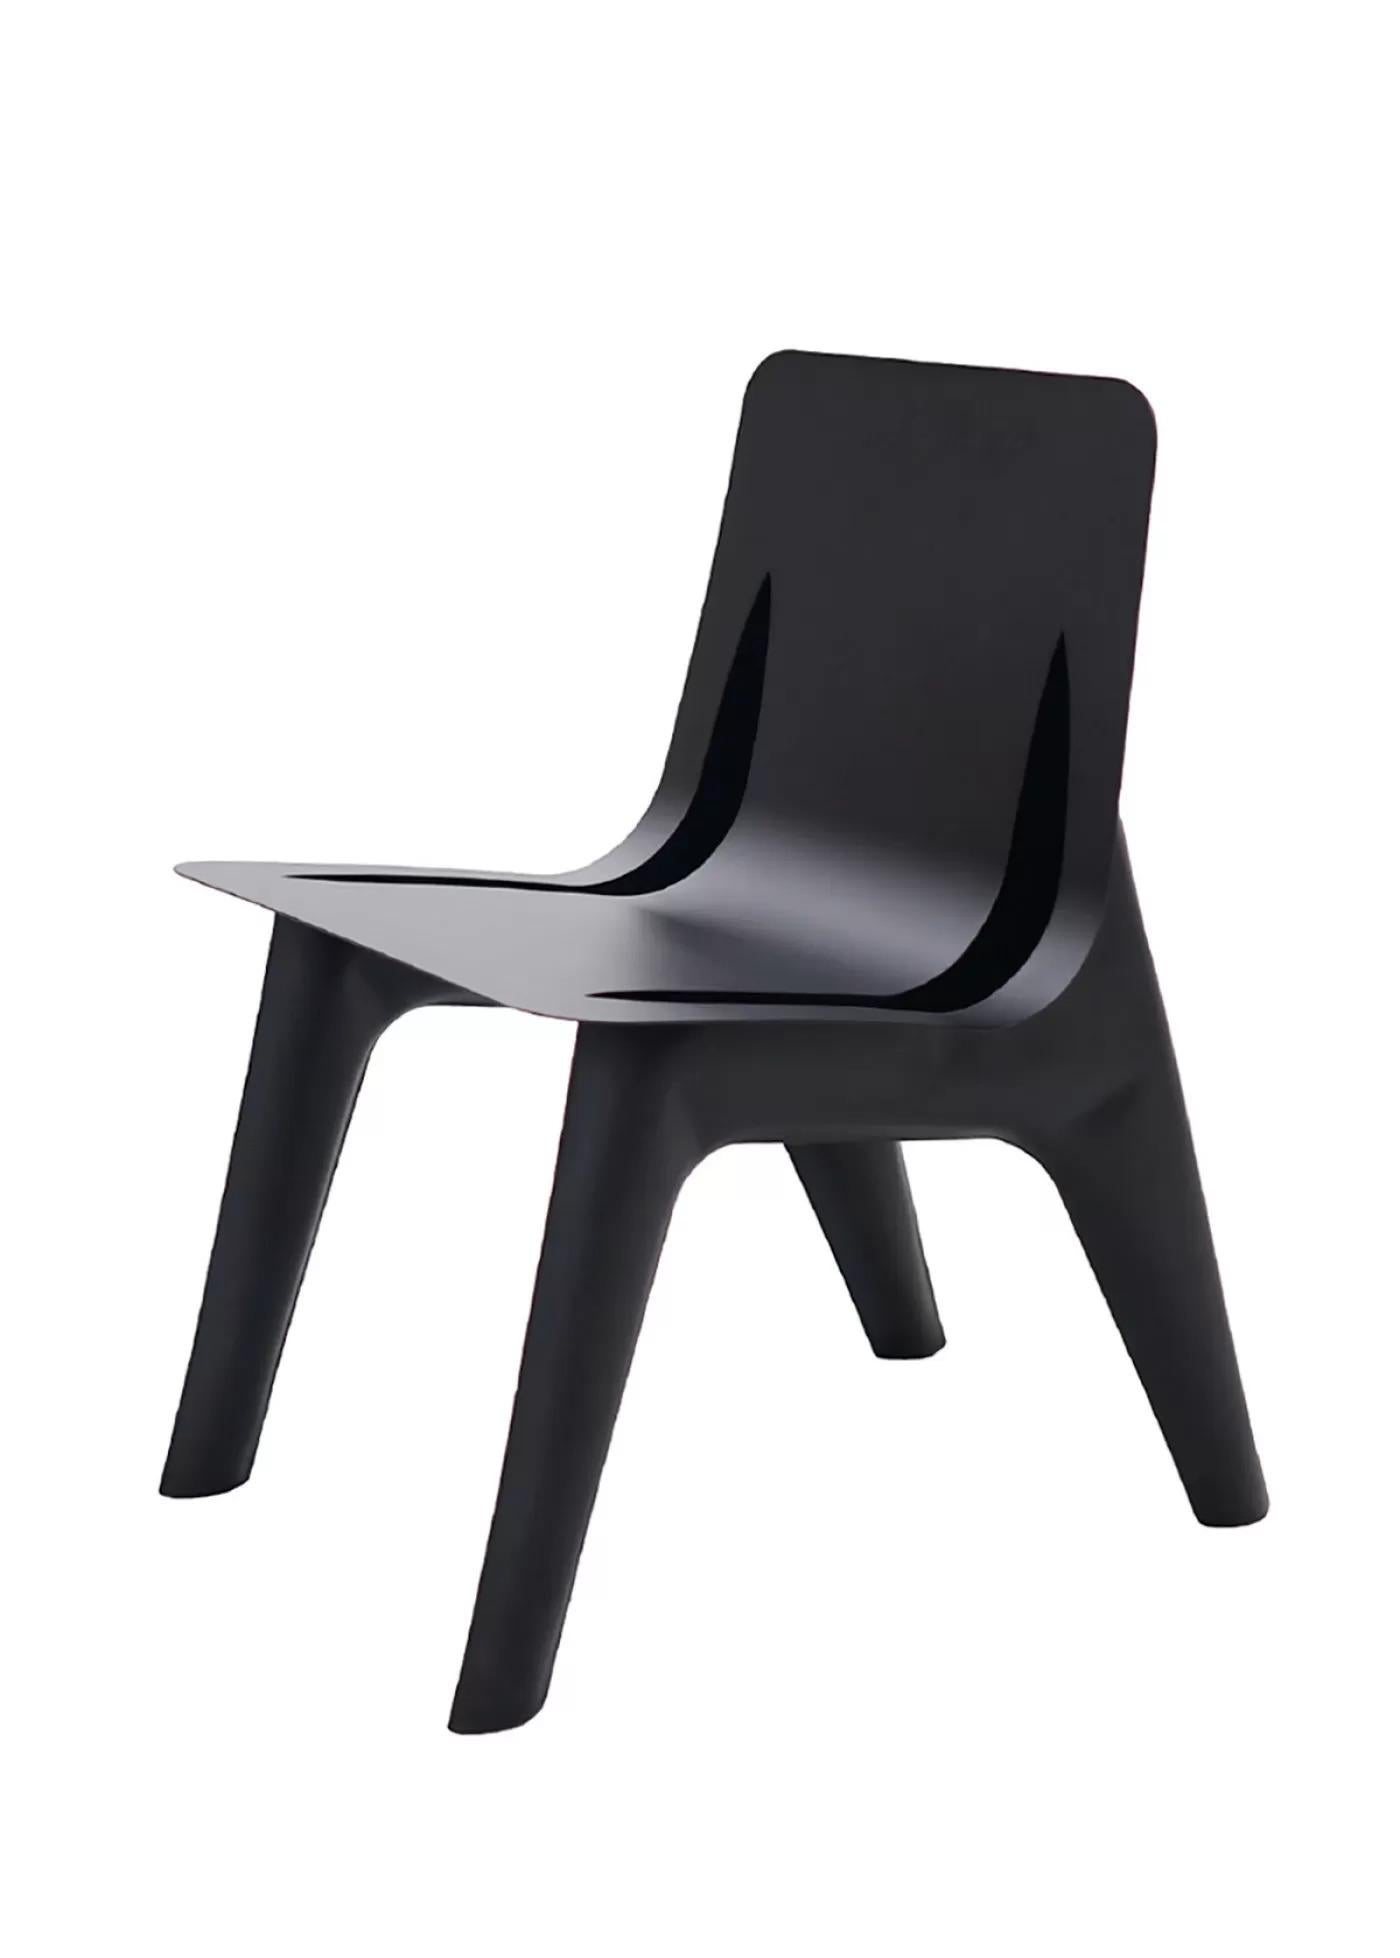 Polish Contemporary Lounge Chair 'J-Chair' by Zieta, Alumium For Sale